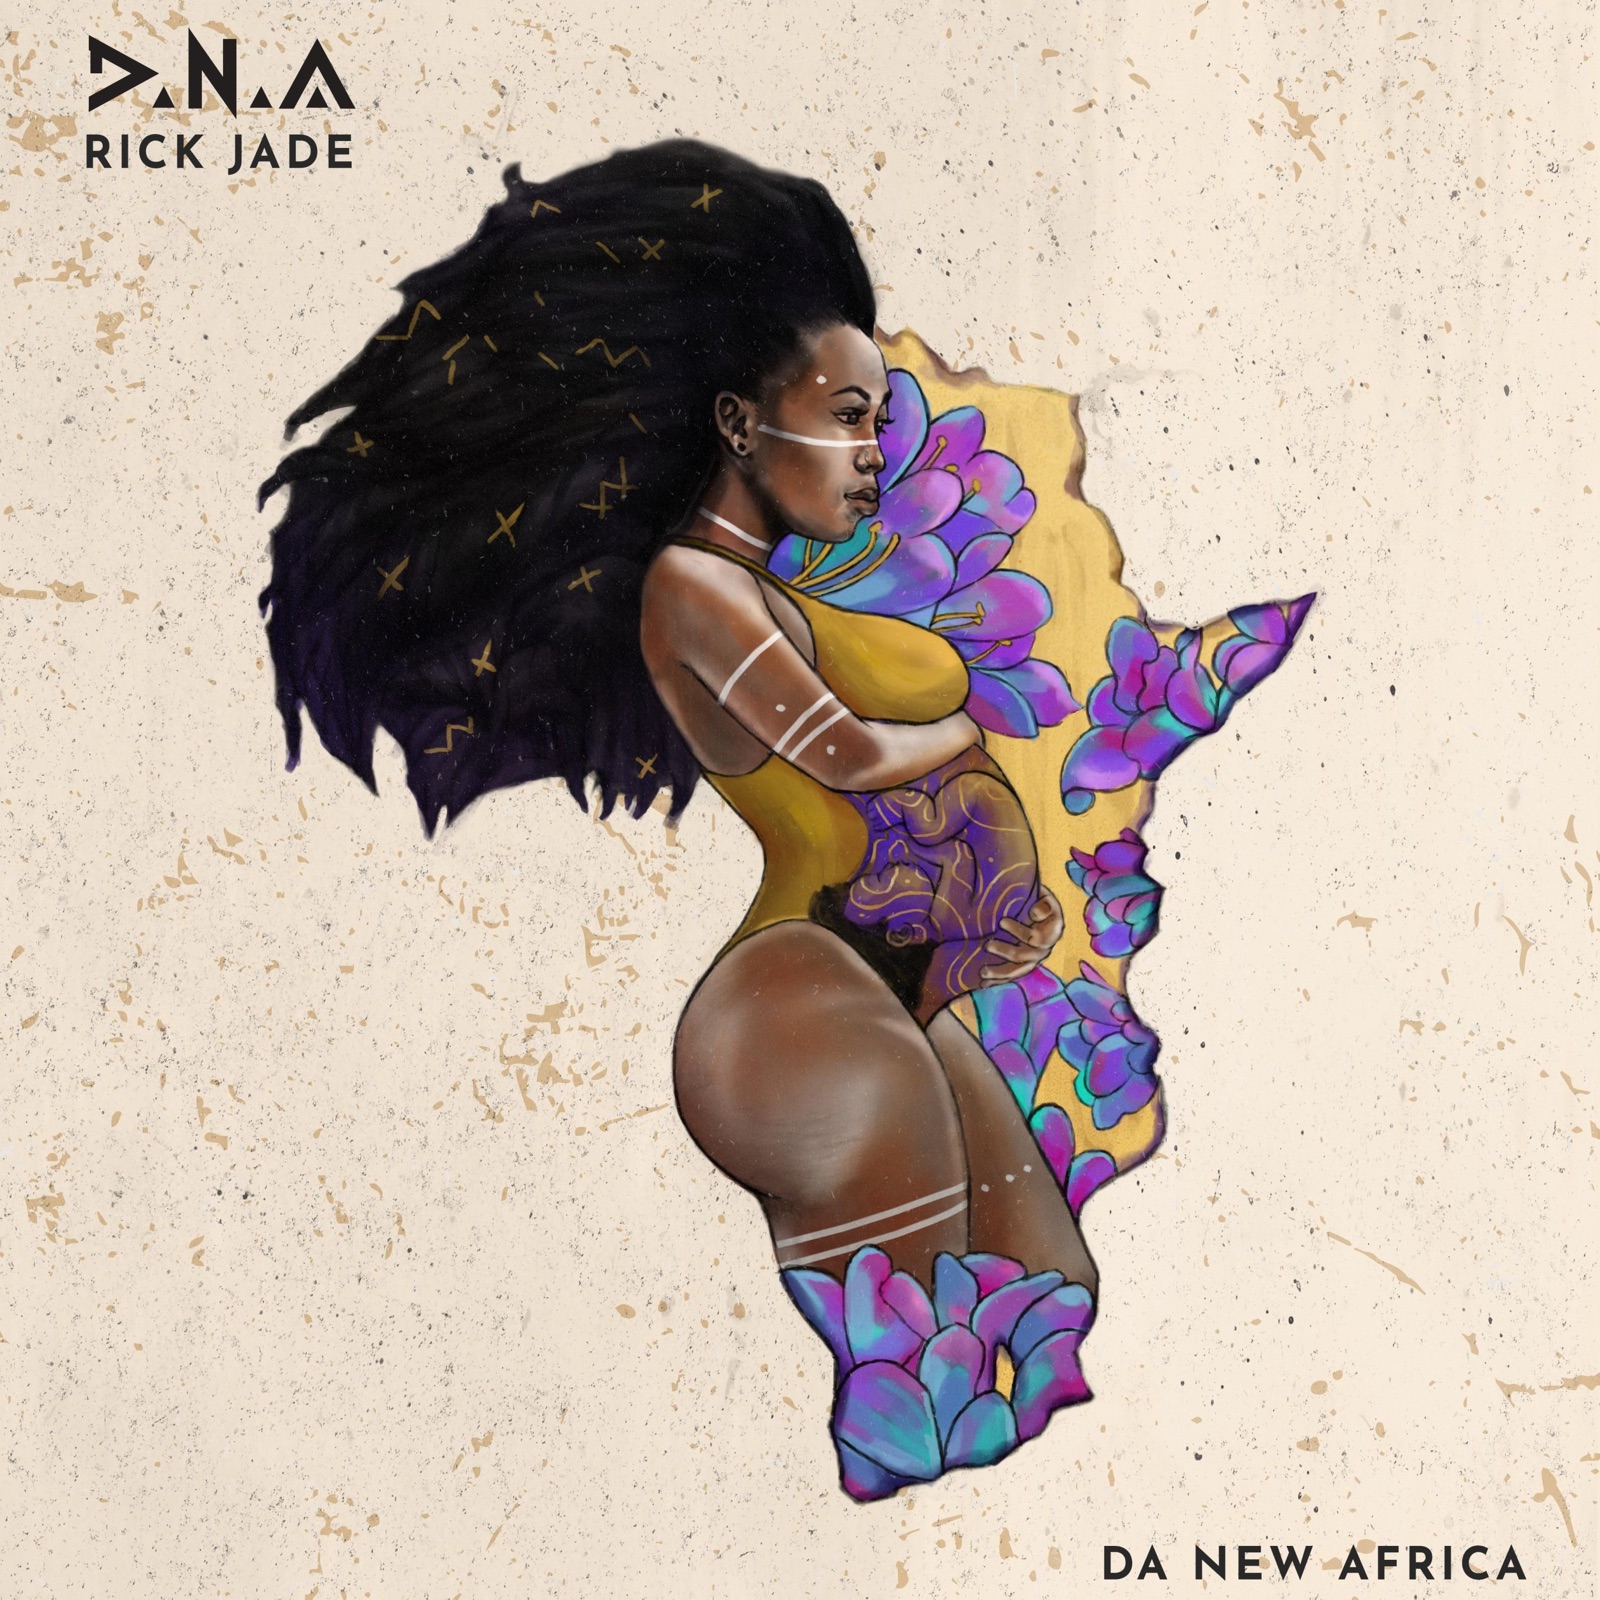 D.N.A (Da New Africa)